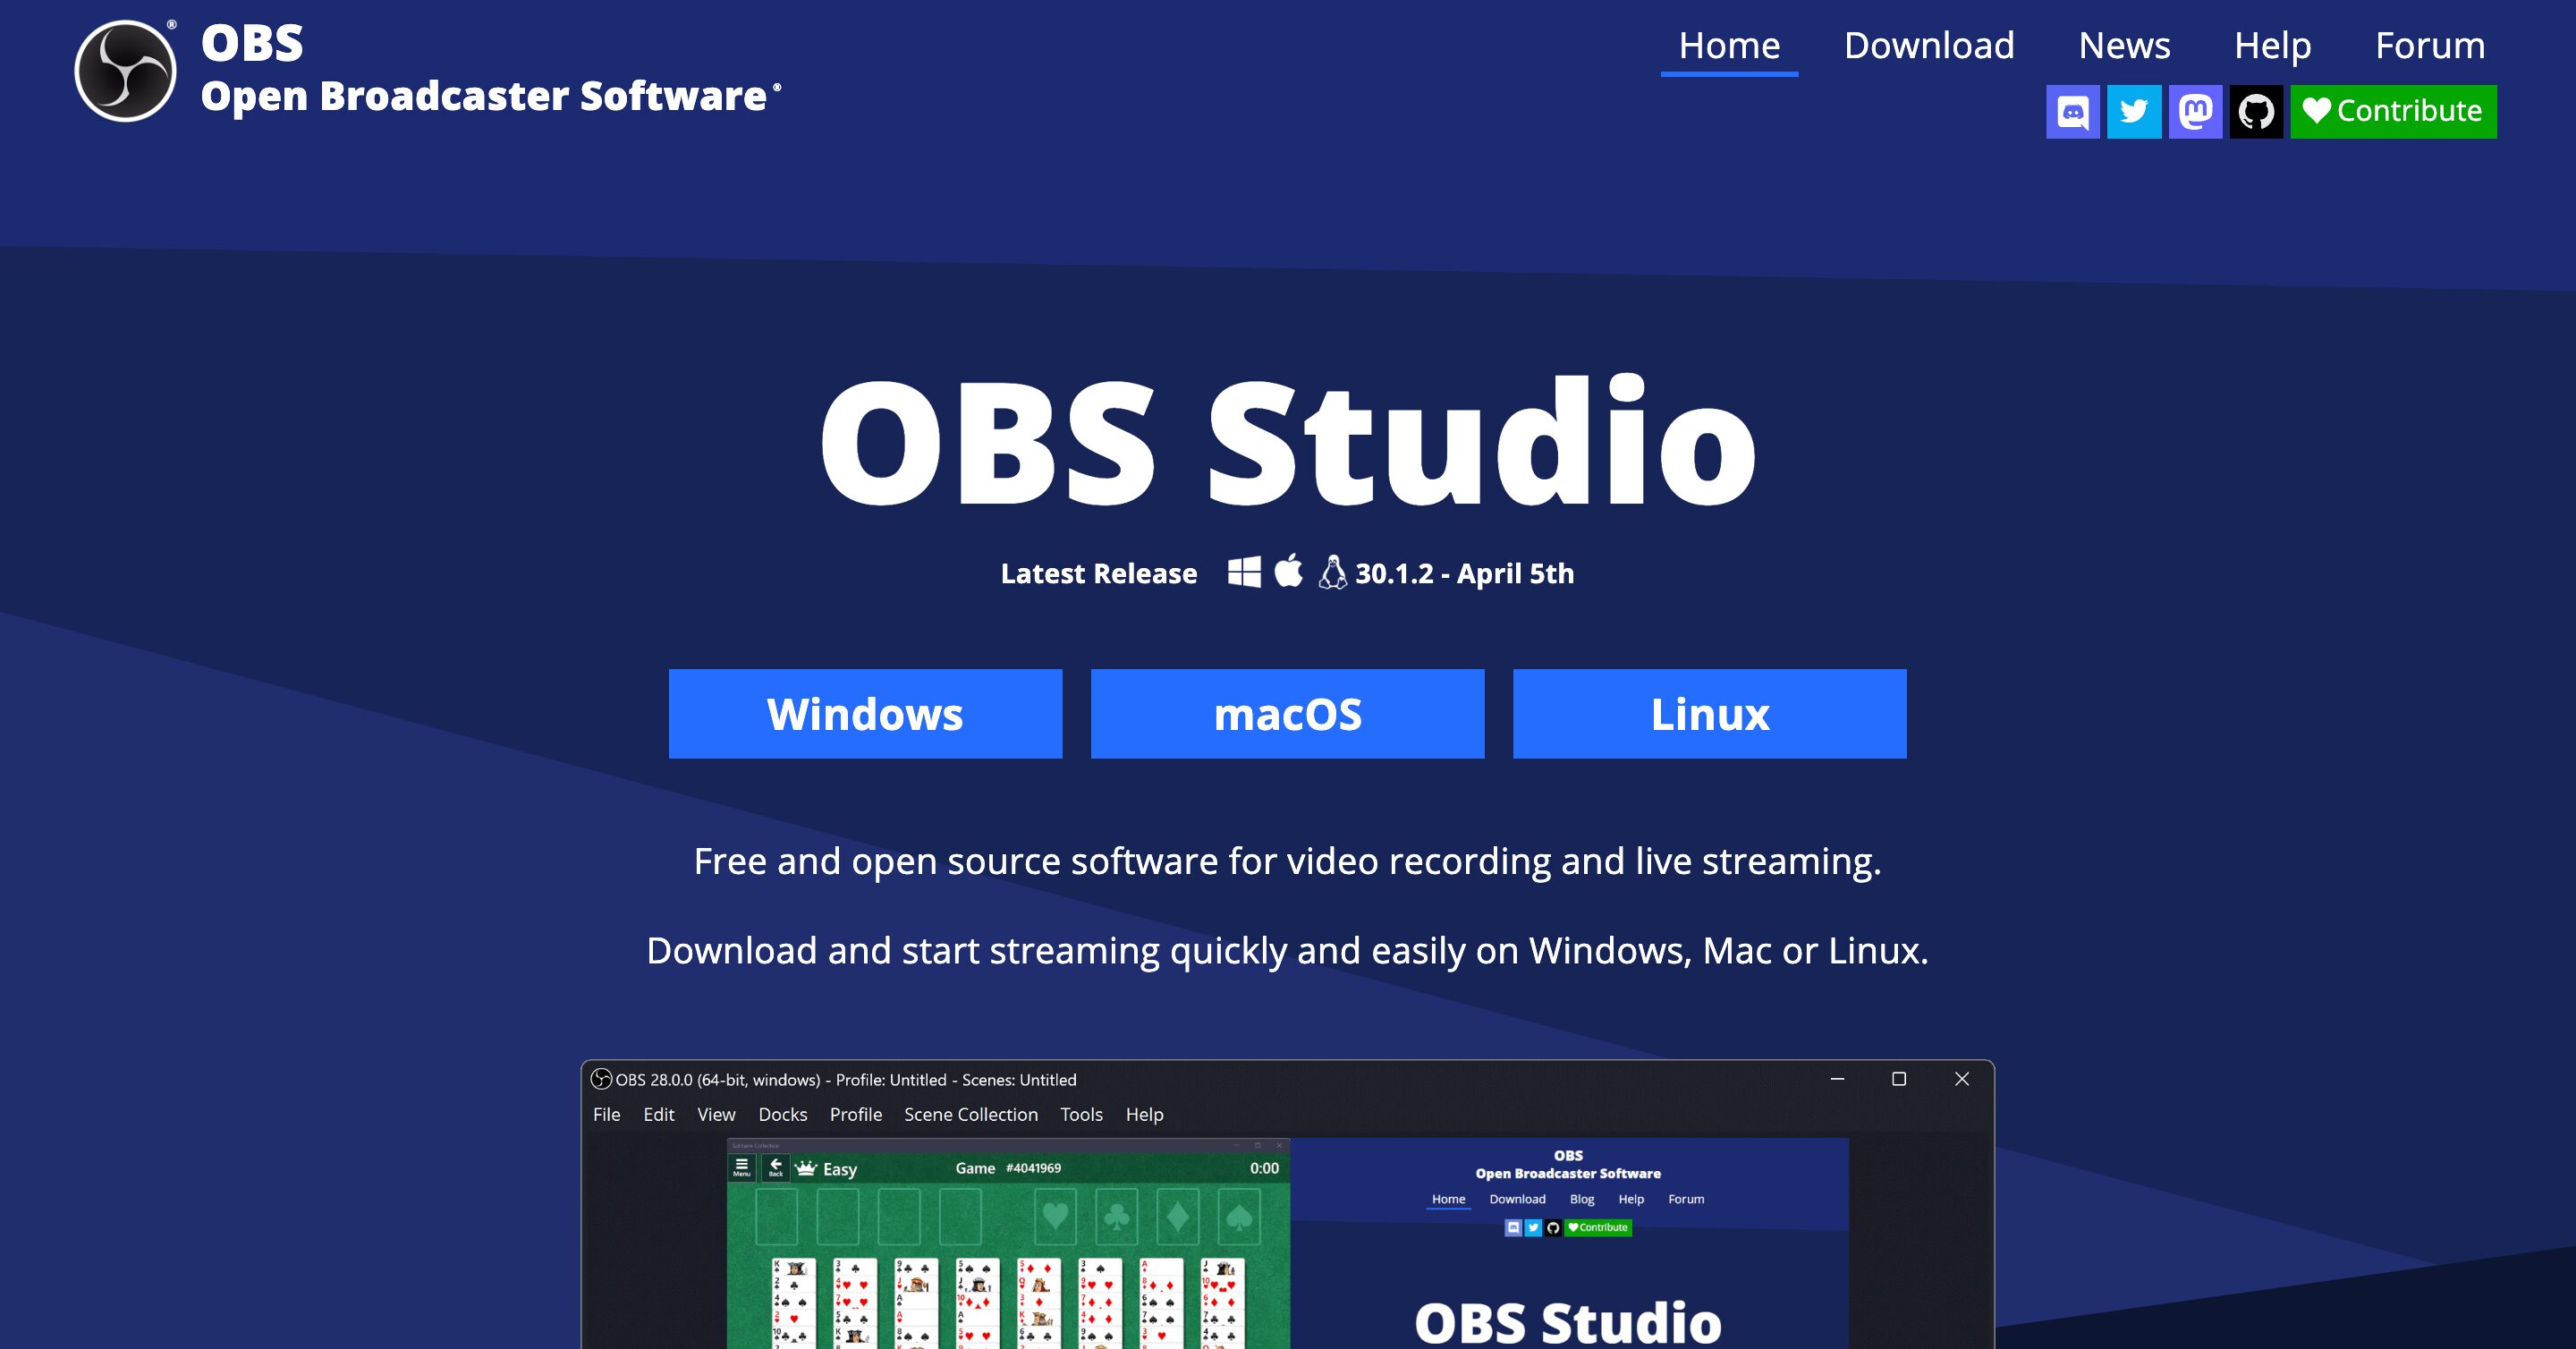 obs studio homepage